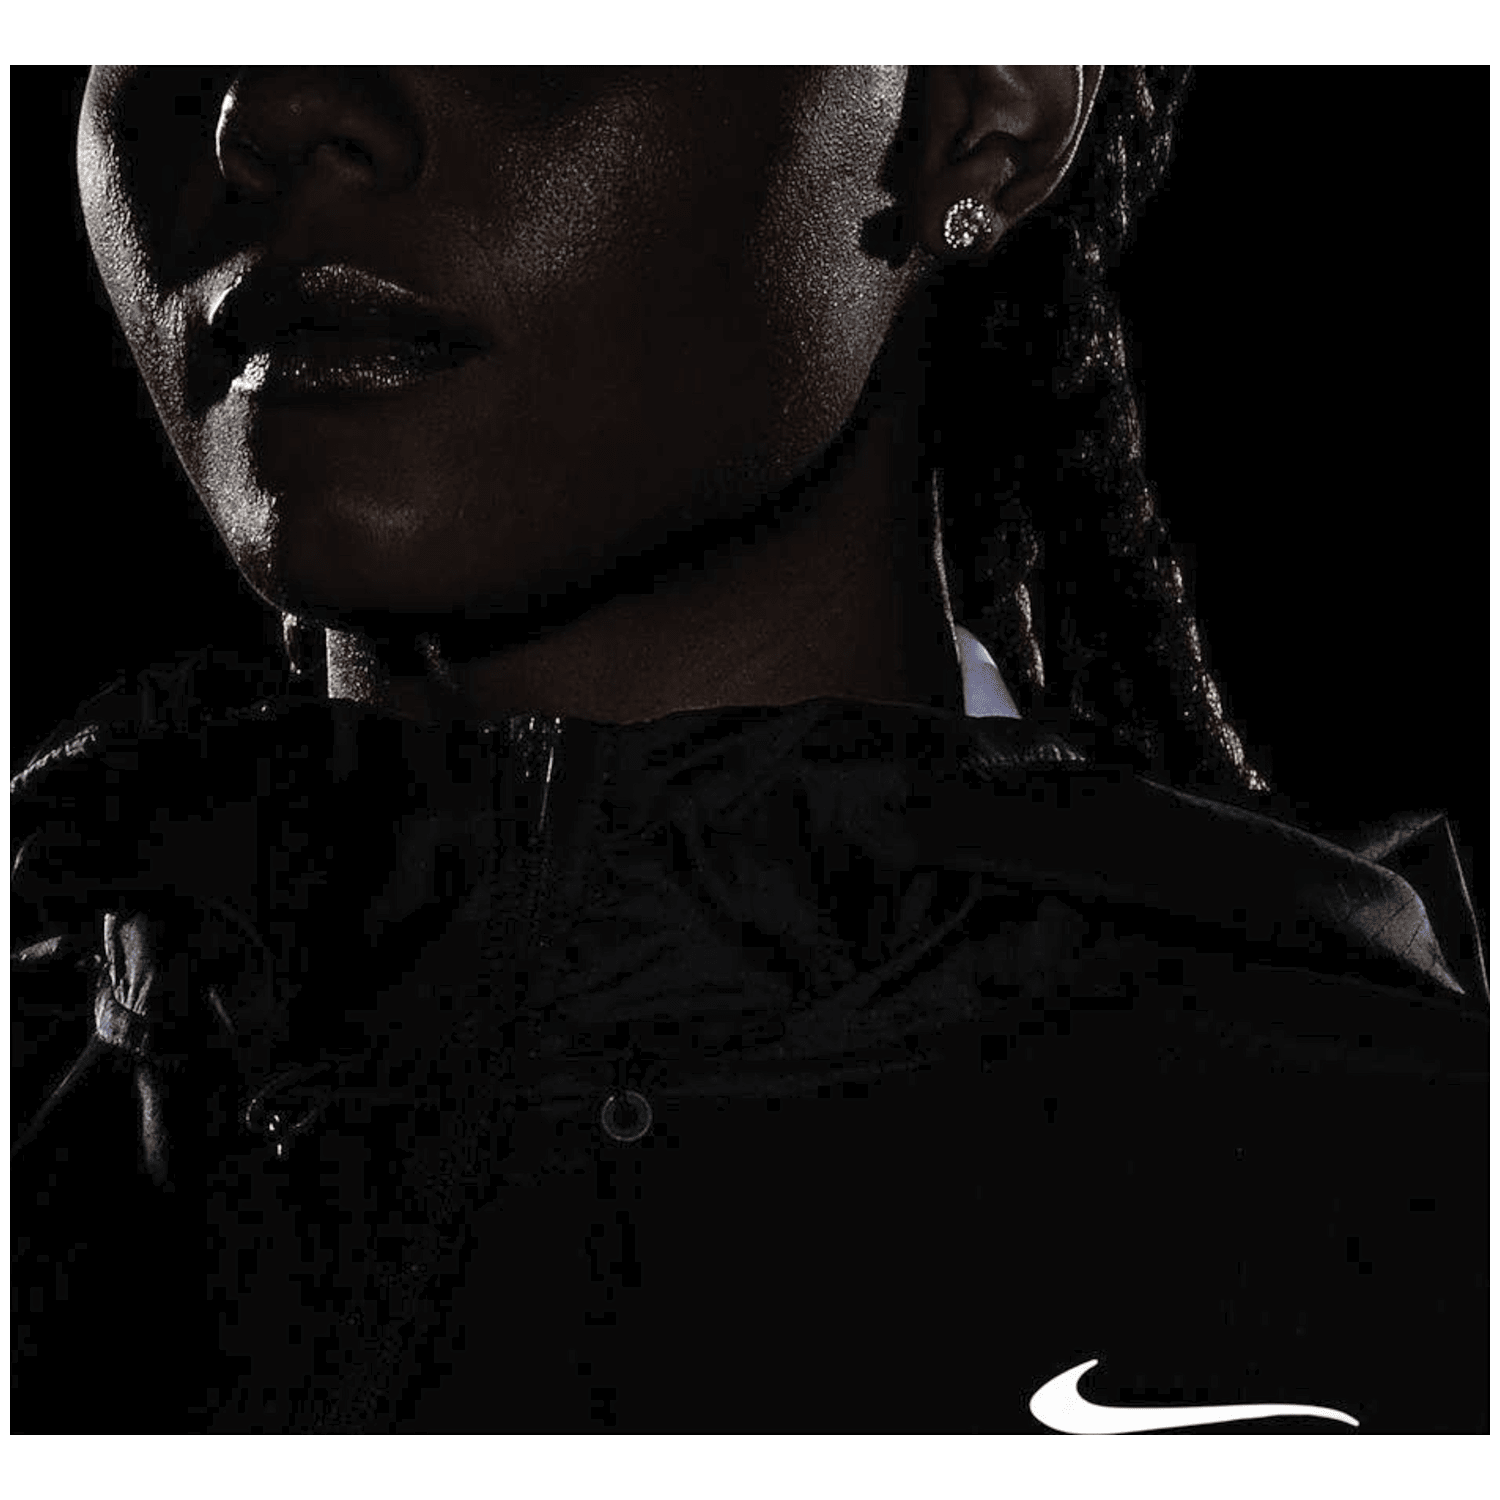 Nike Essential Damen Unterjacke